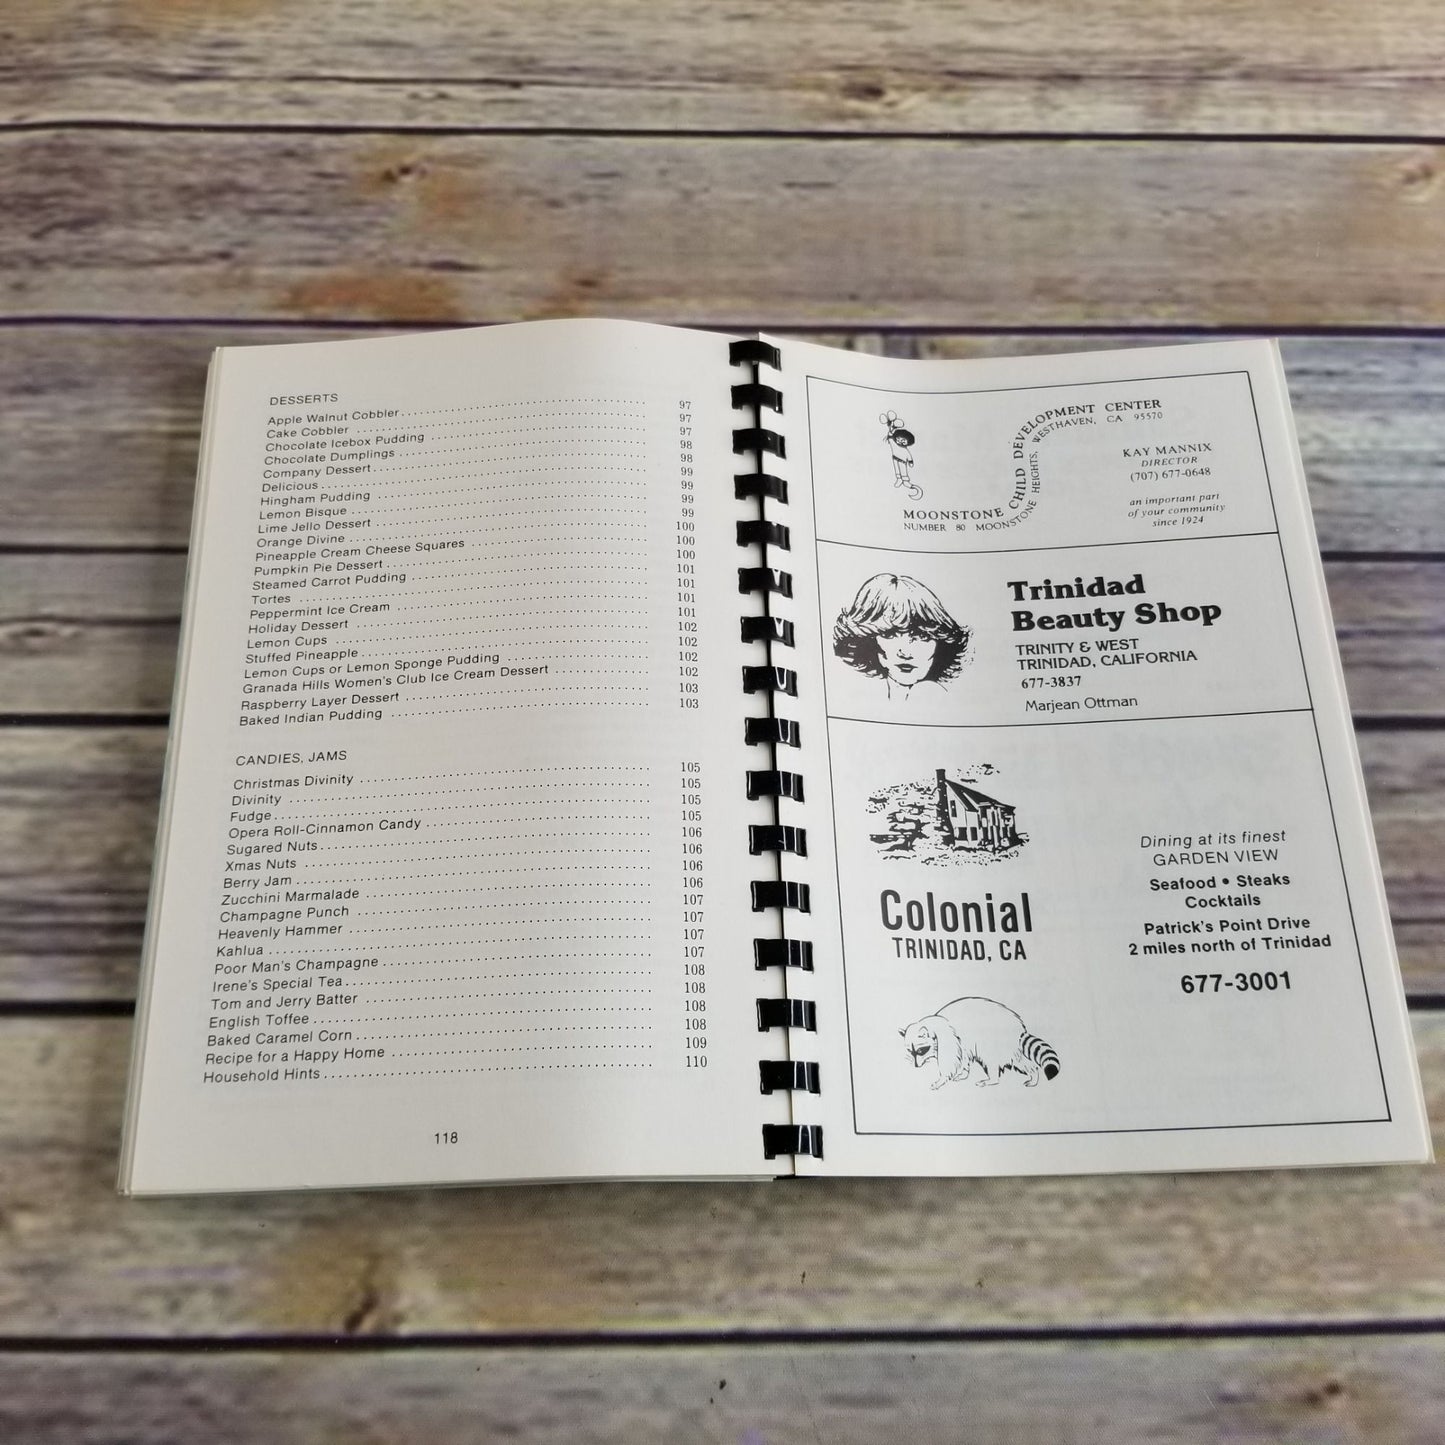 Vintage California Cookbook Trinidad Treasures Civic Club Historical 1977 Spiral Bound Recipes Historical Cook Book